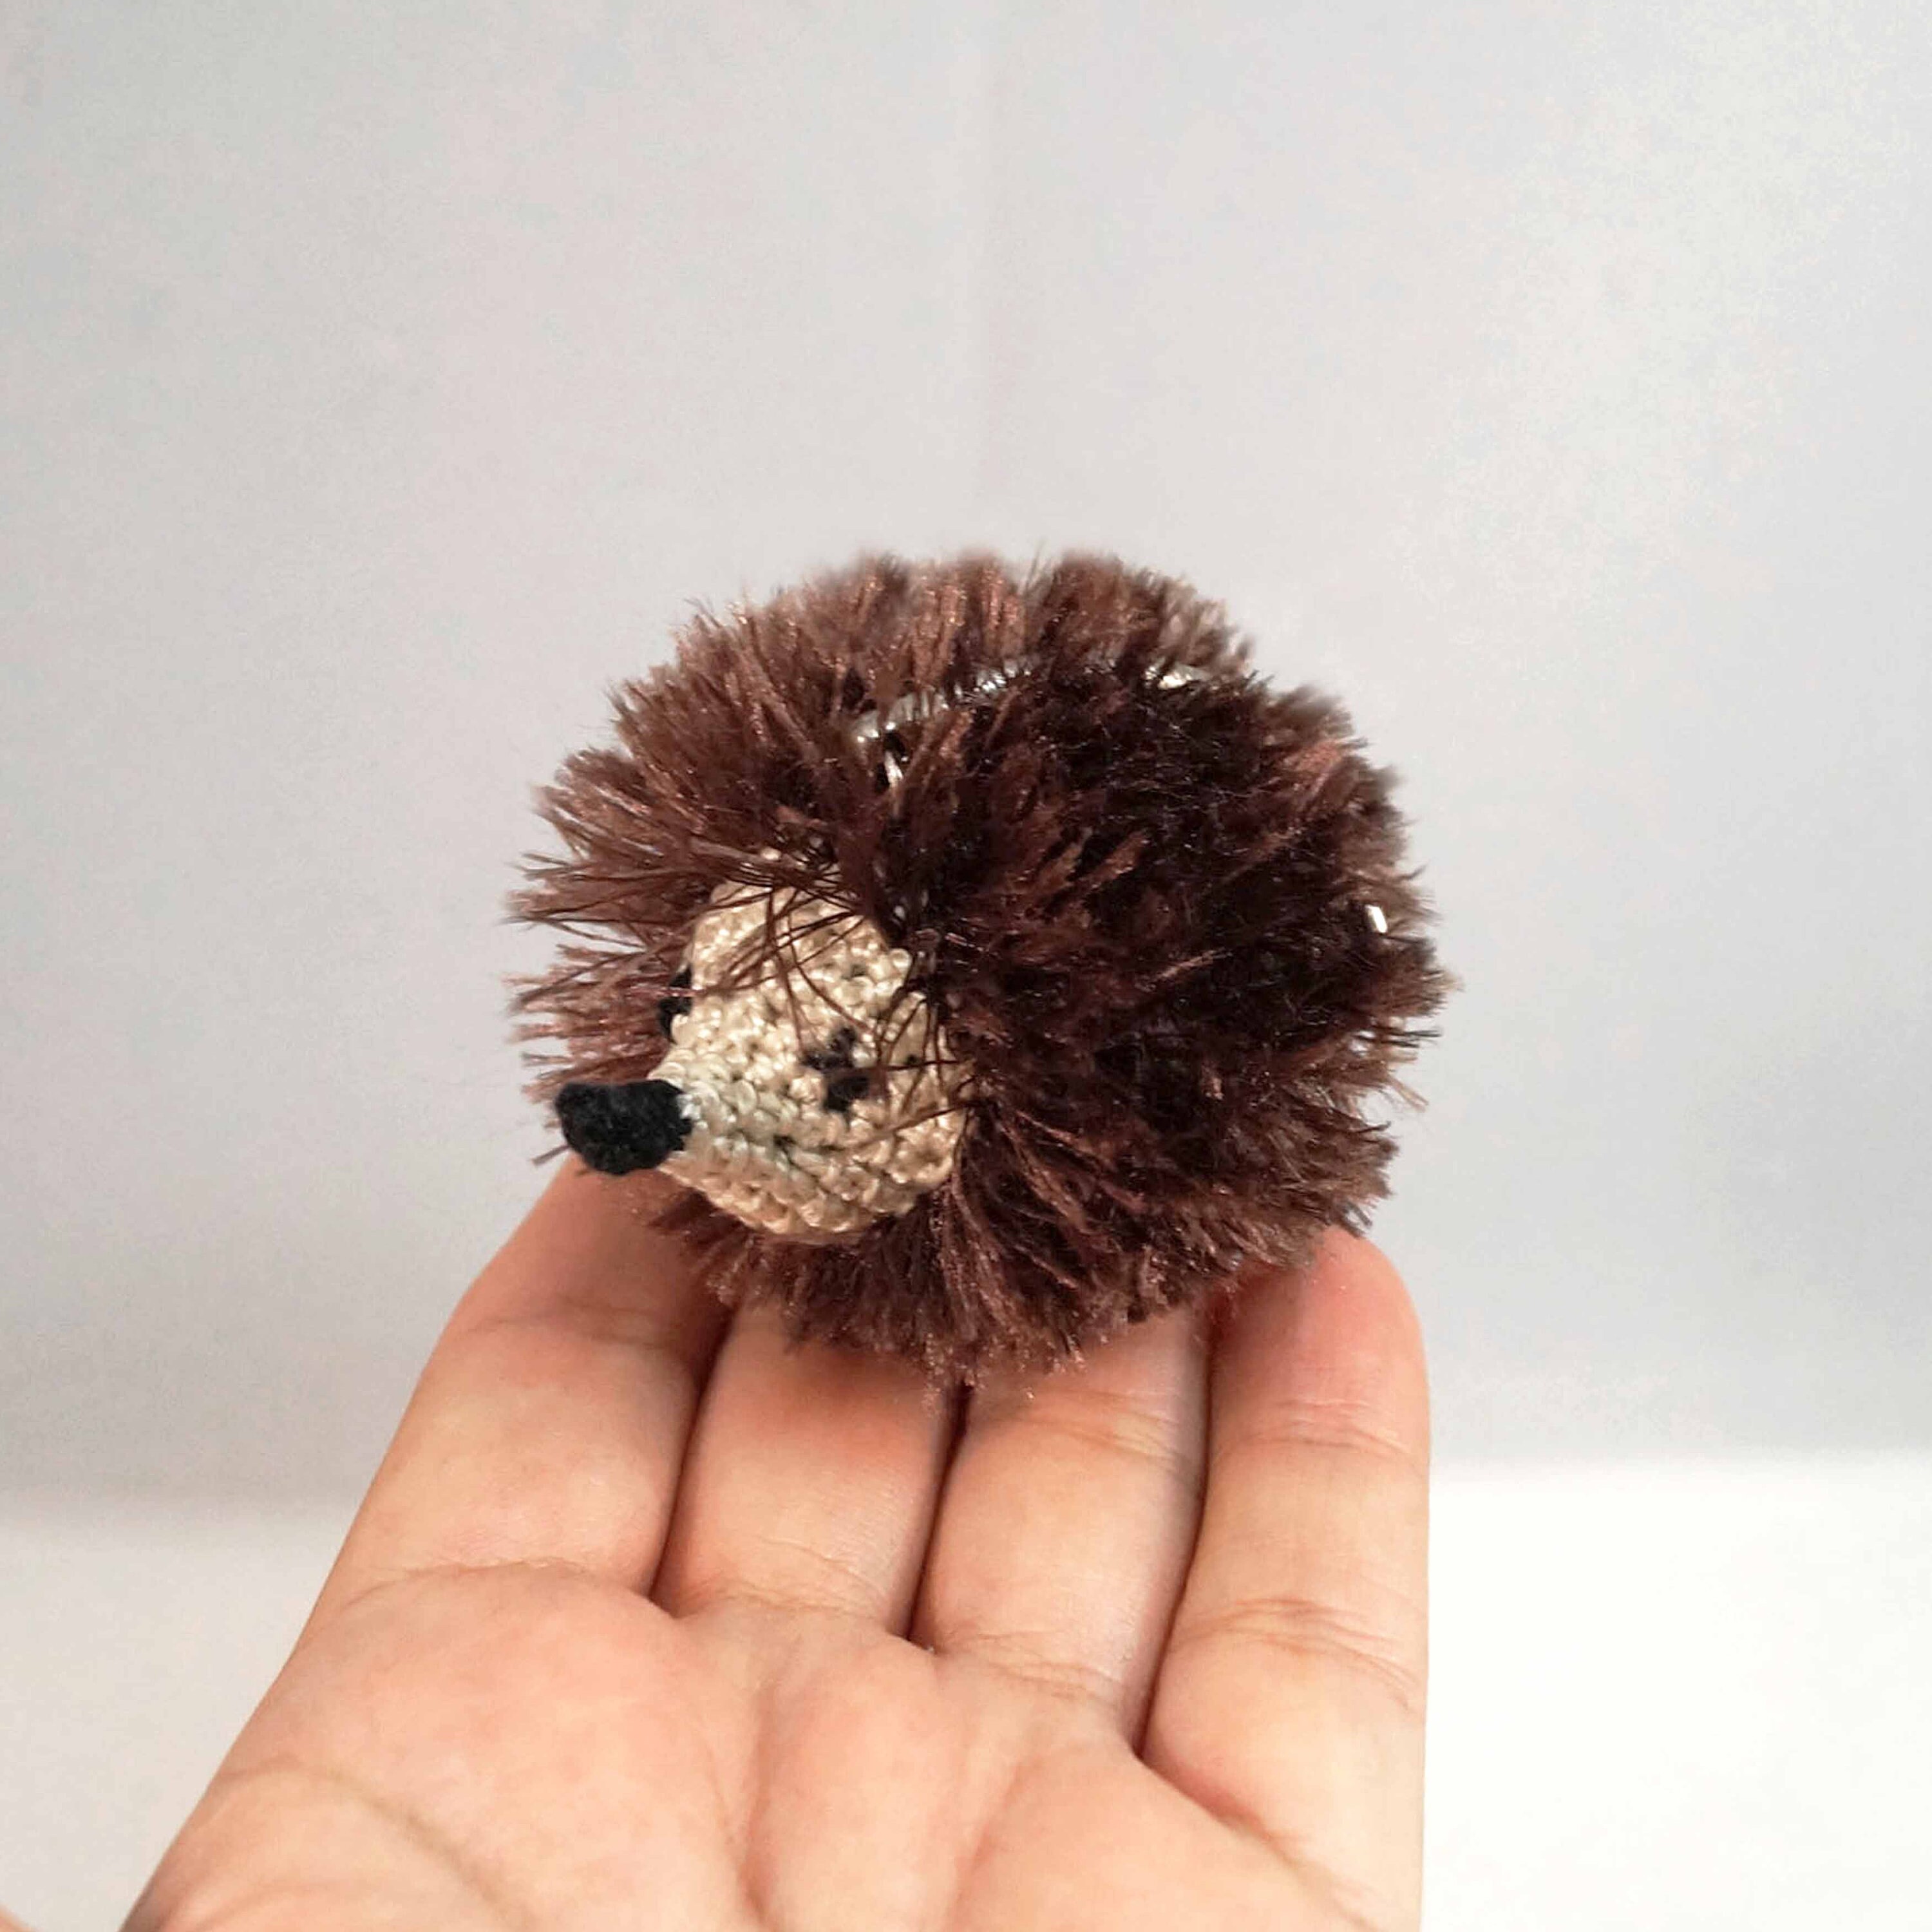 Micro Crocheted Hedgehog Keyring/bag Charm/keychain 